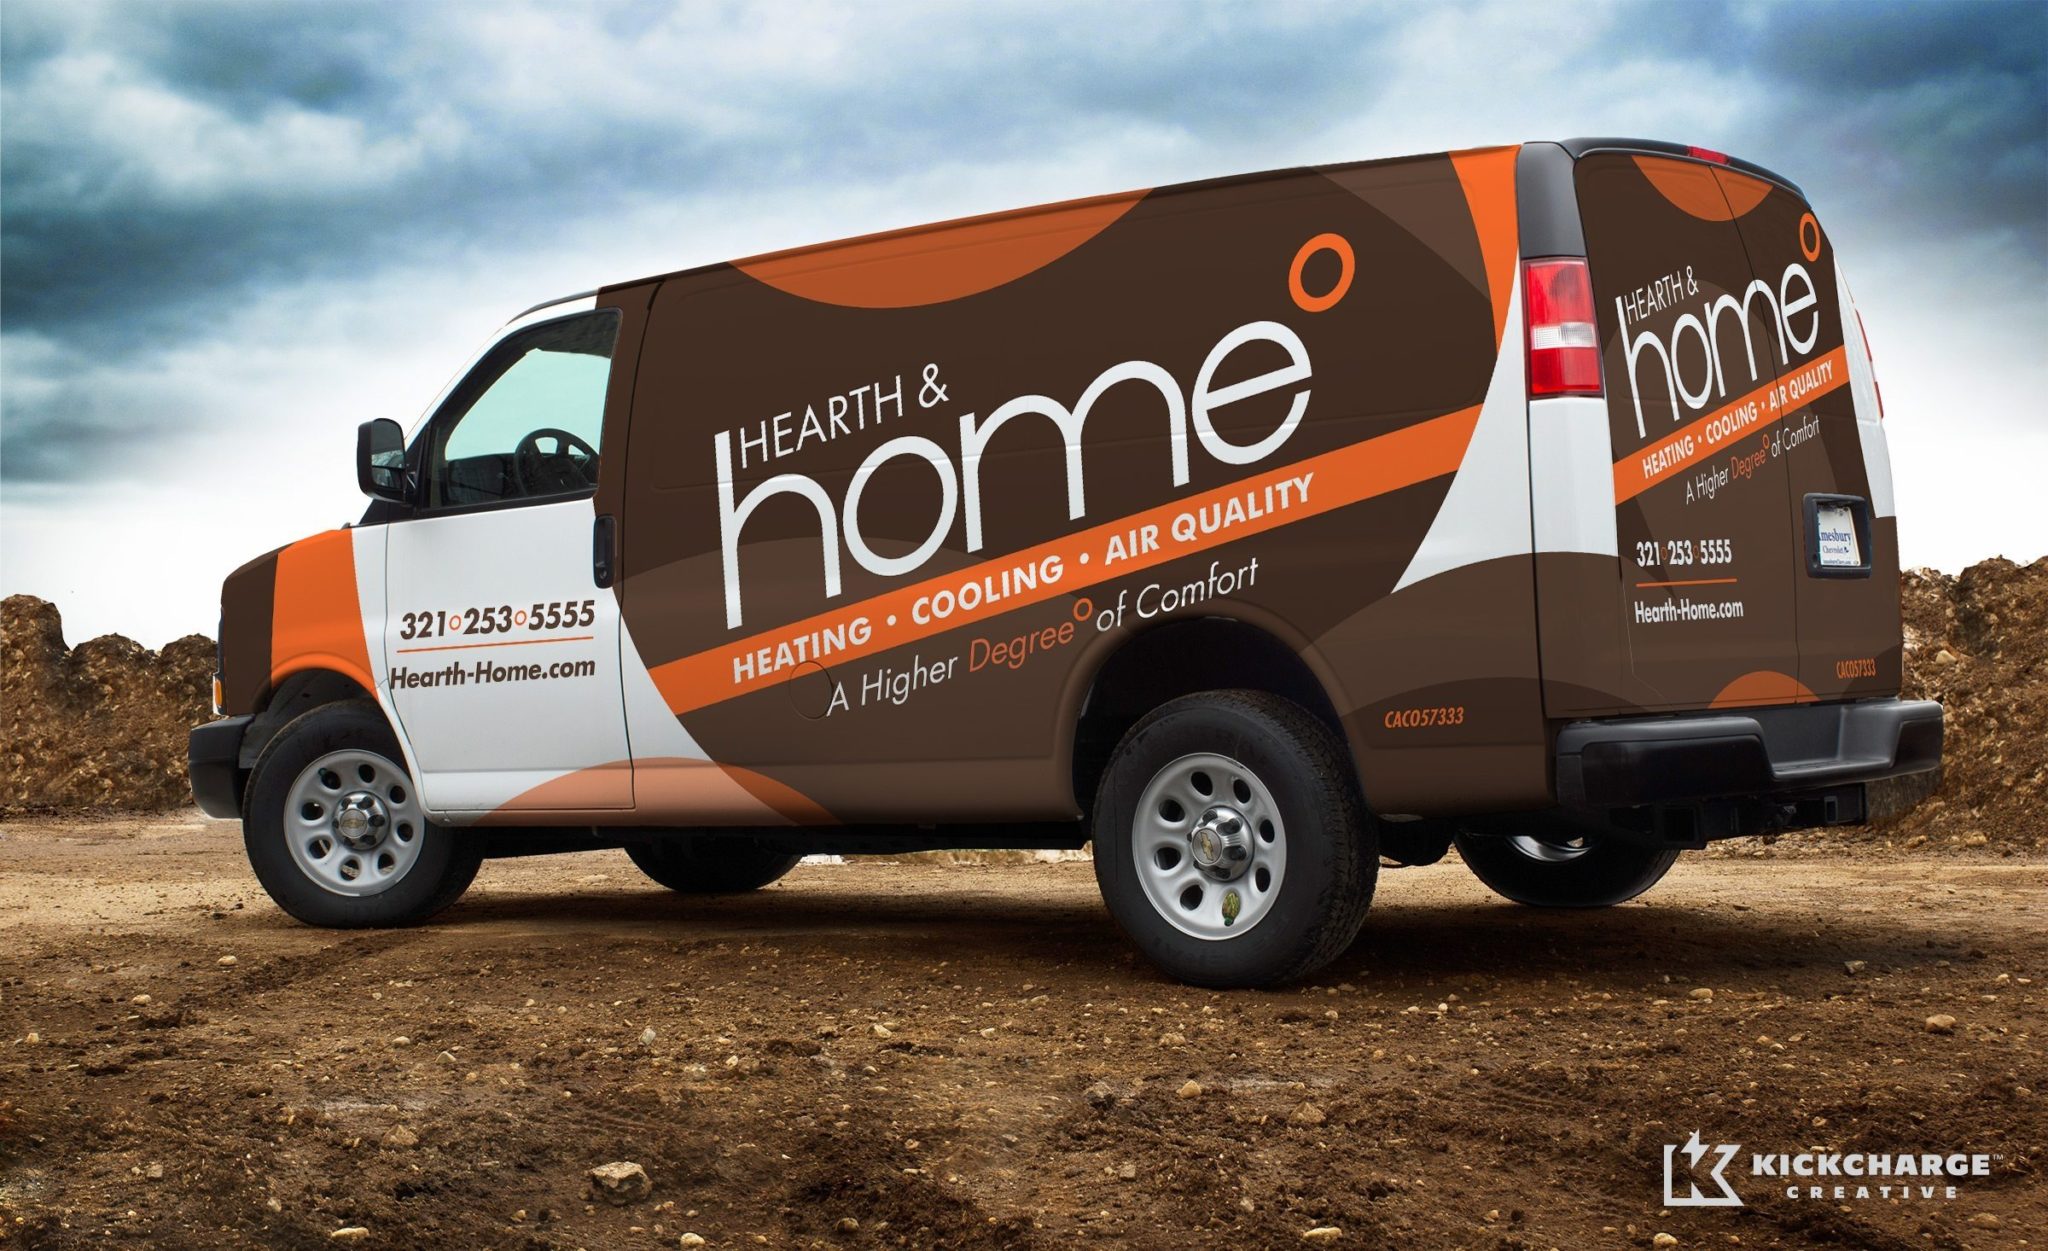 Hearth & Home HVAC contractor truck wrap and fleet branding integration.